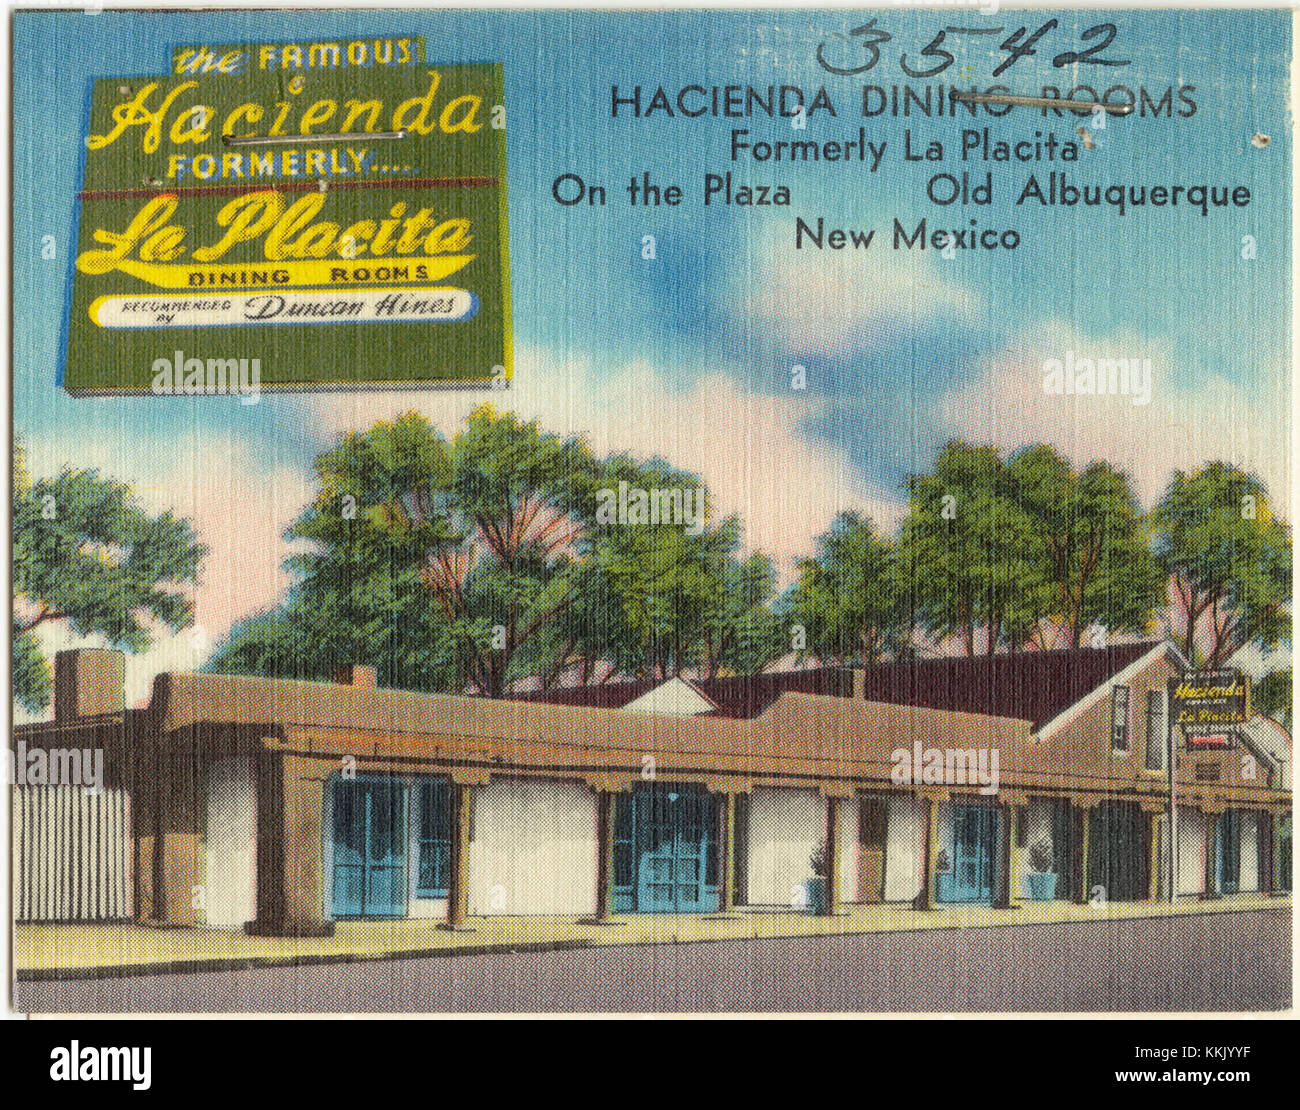 Hacienda dinning rooms, formerly La Placita, on the plaza, Old Albuquerque, New Mexico Stock Photo